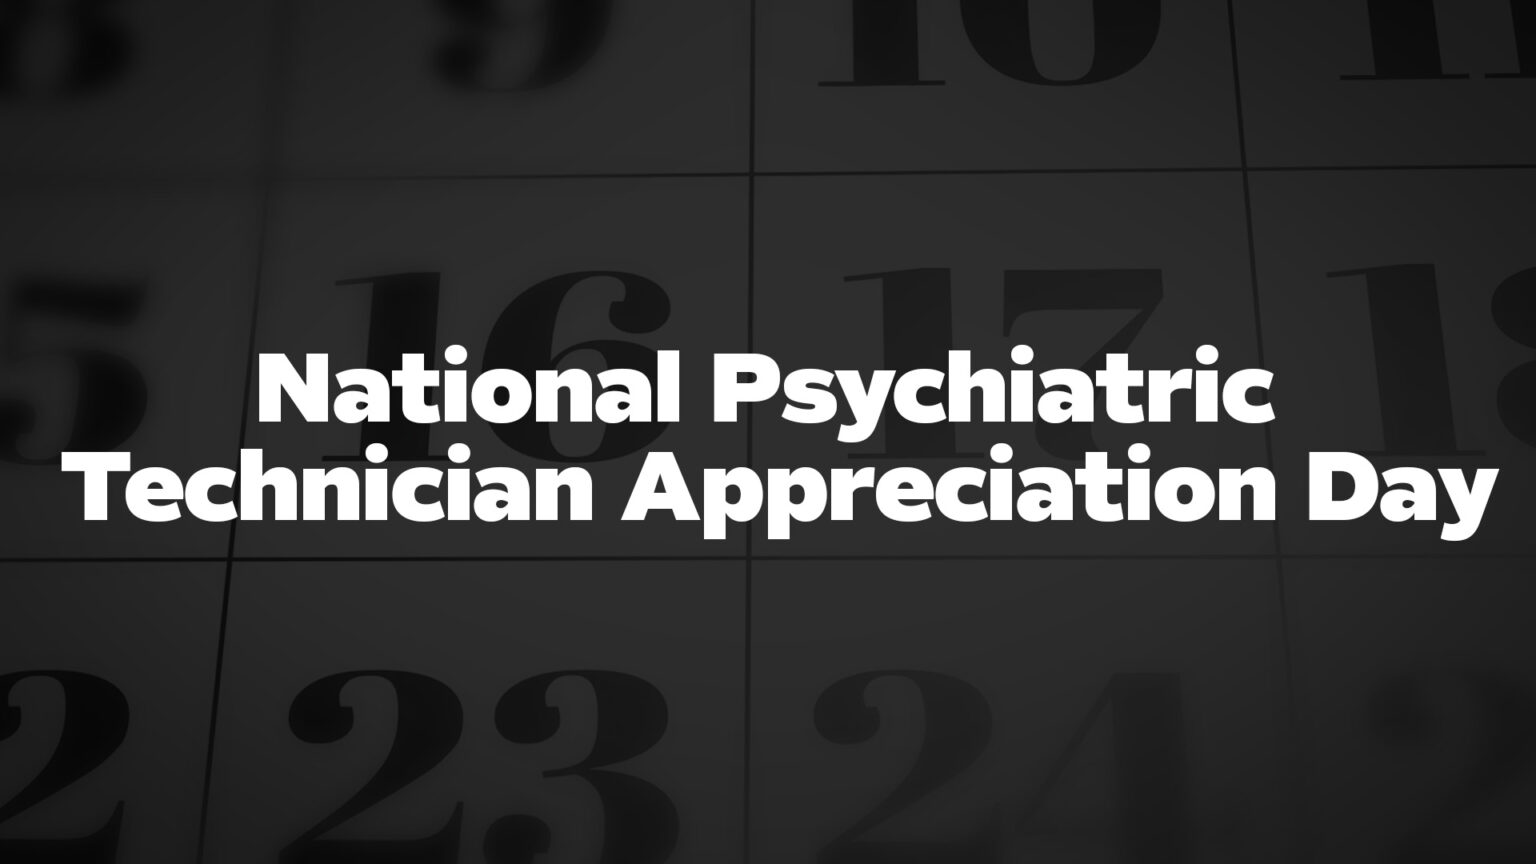 NationalPsychiatricTechnicianAppreciationDay List Of National Days